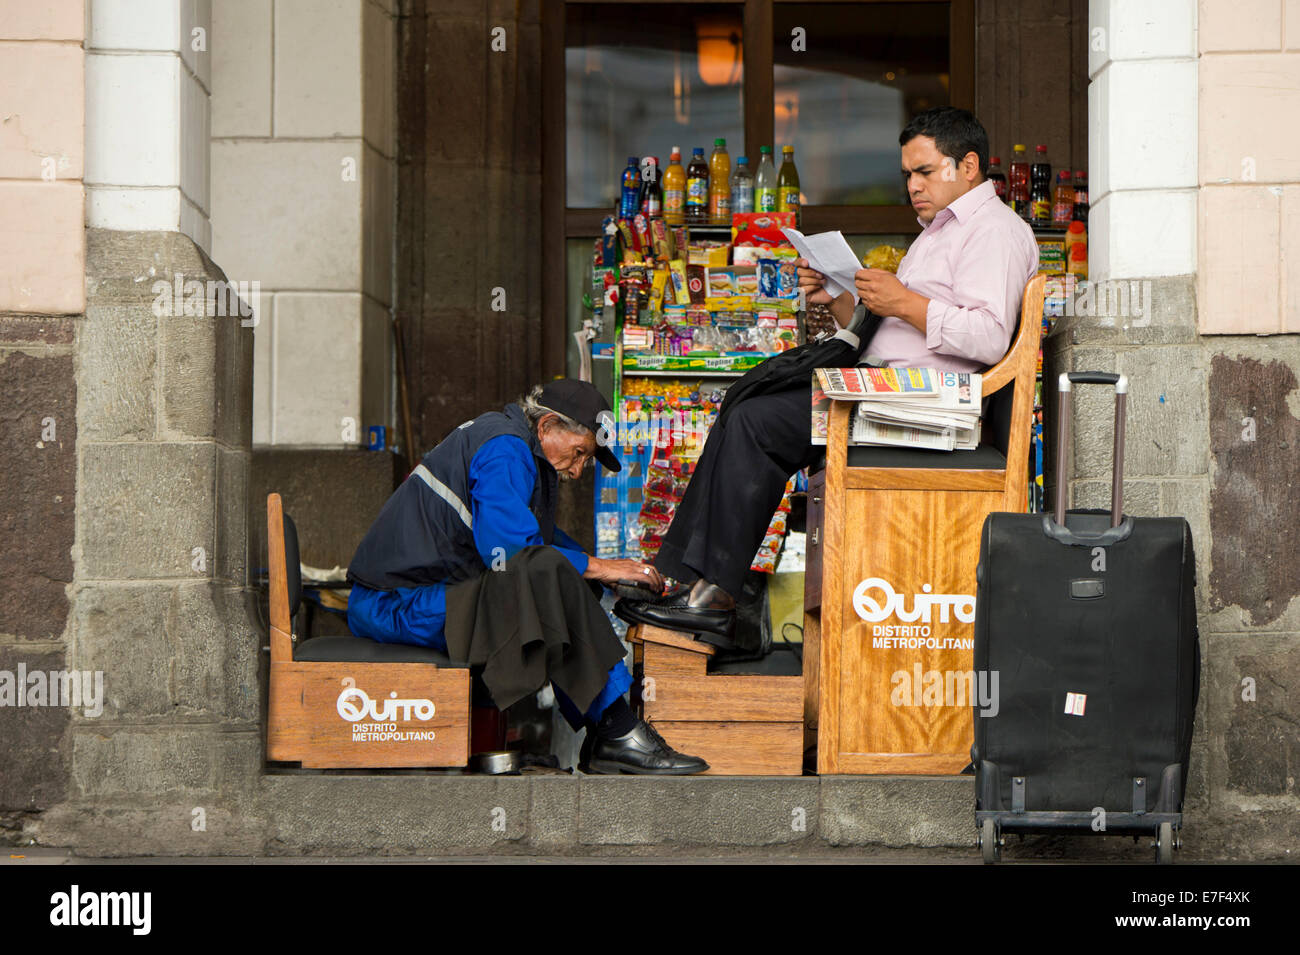 Joven lustrabotas atendiendo a un cliente, Quito, Ecuador, Sudamérica Foto de stock